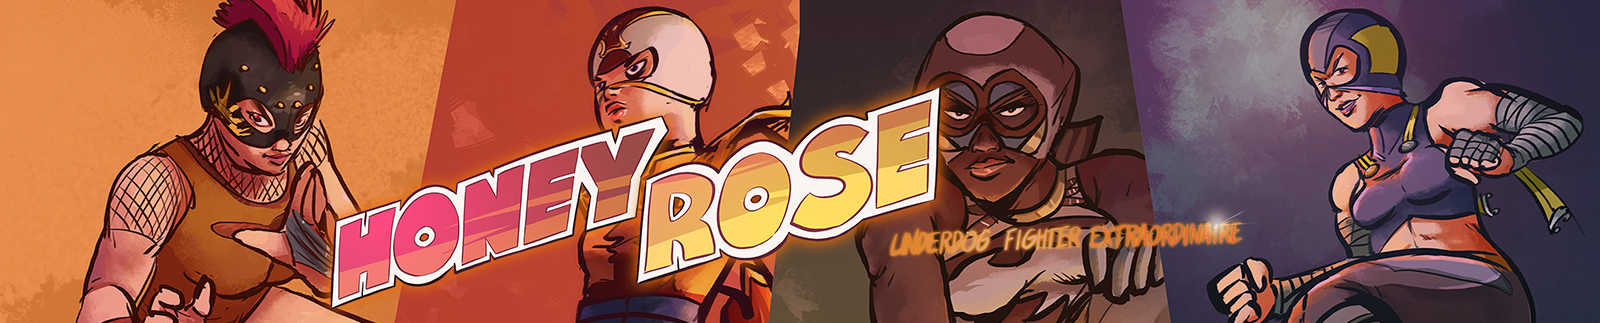 Honey Rose - Underdog Fighter Extraordinaire